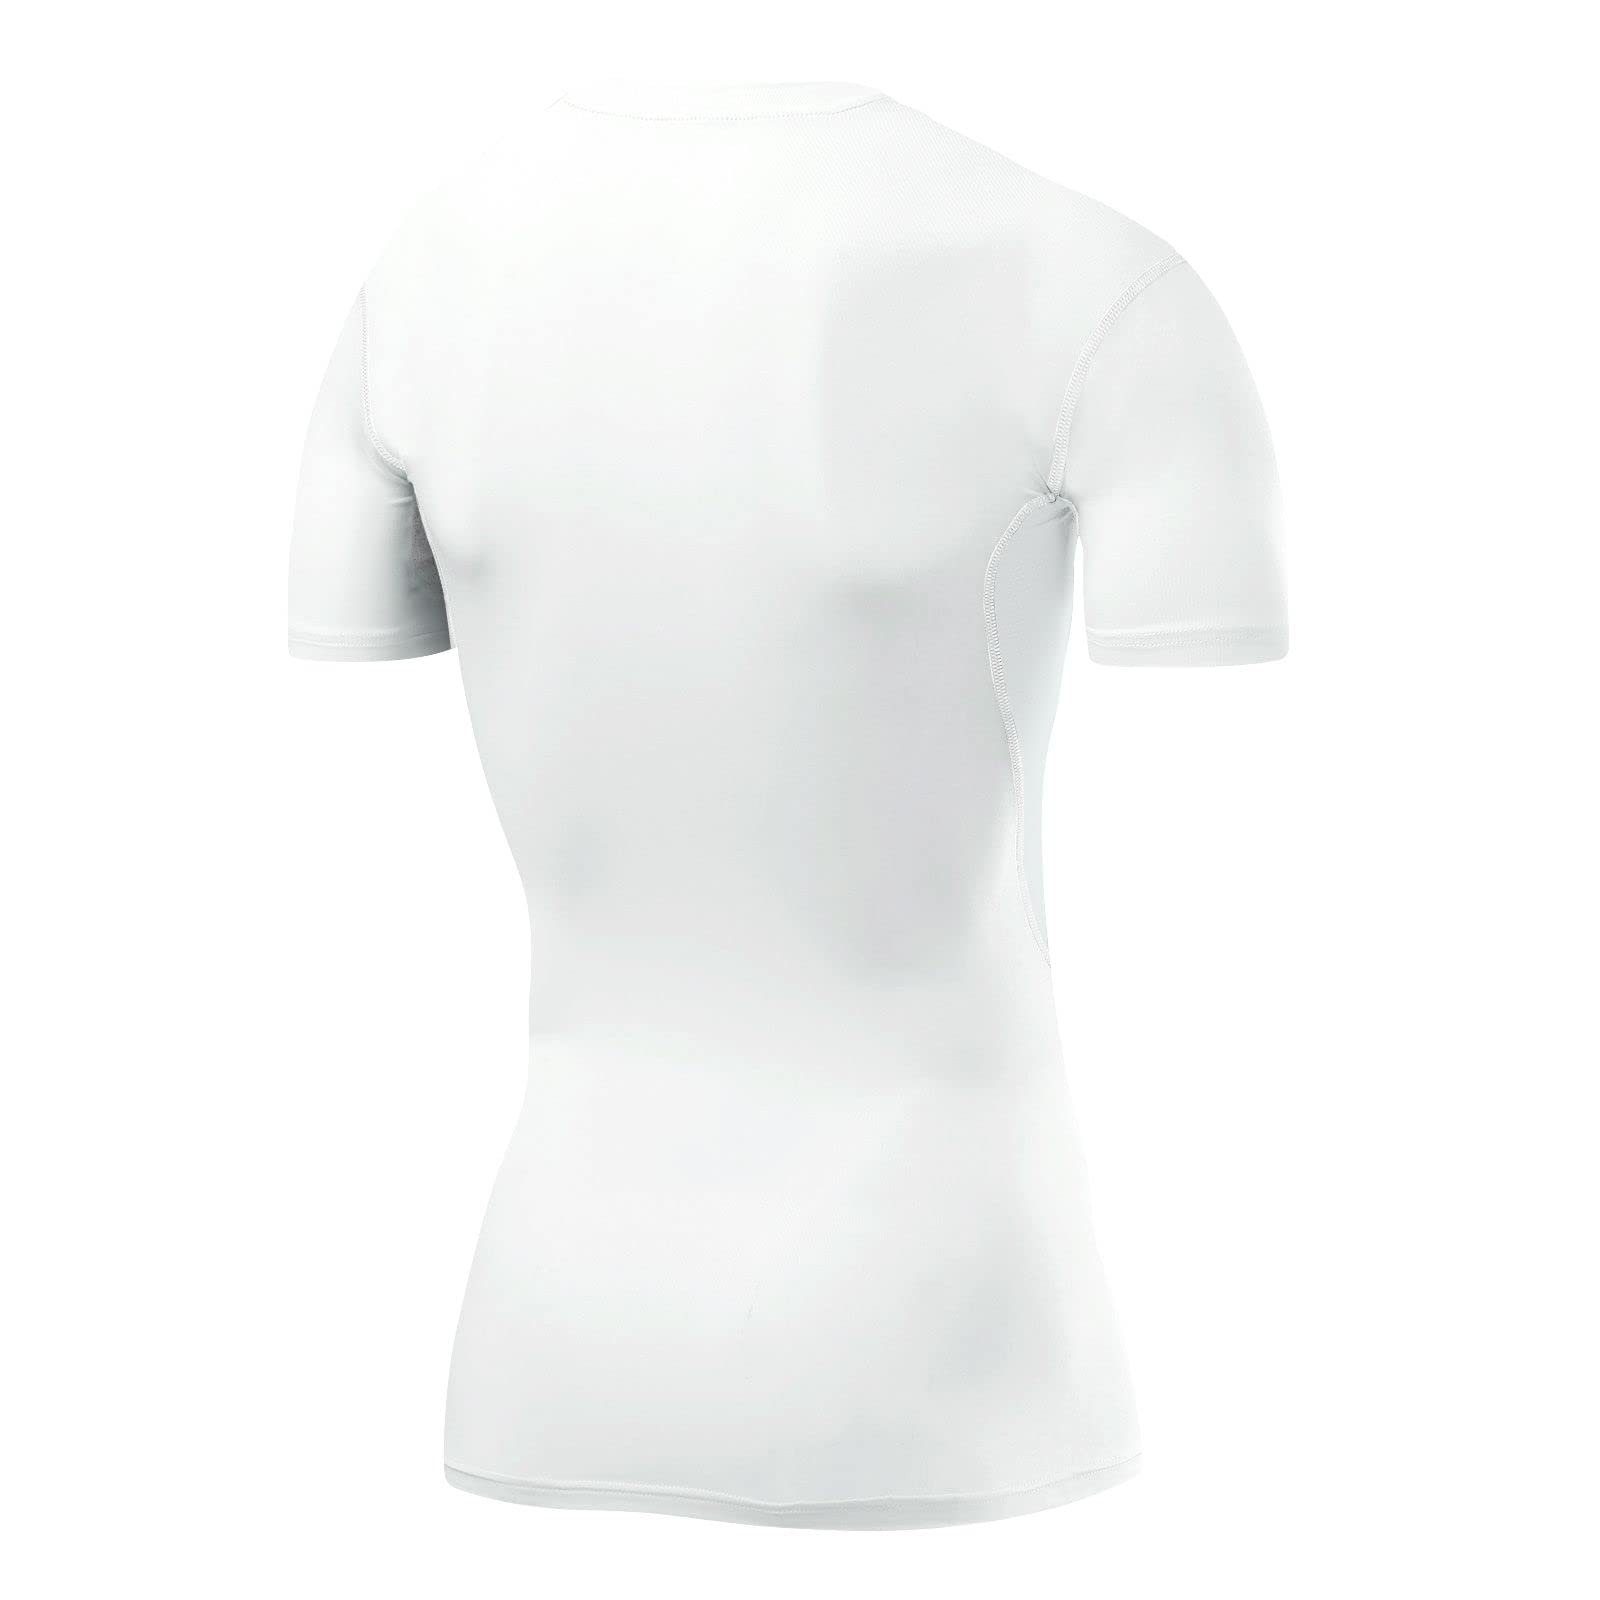 Weiss Herren - elastisch Funktionsunterhemd kurzärmlig, TCA HyperFusion TCA Sportshirt,